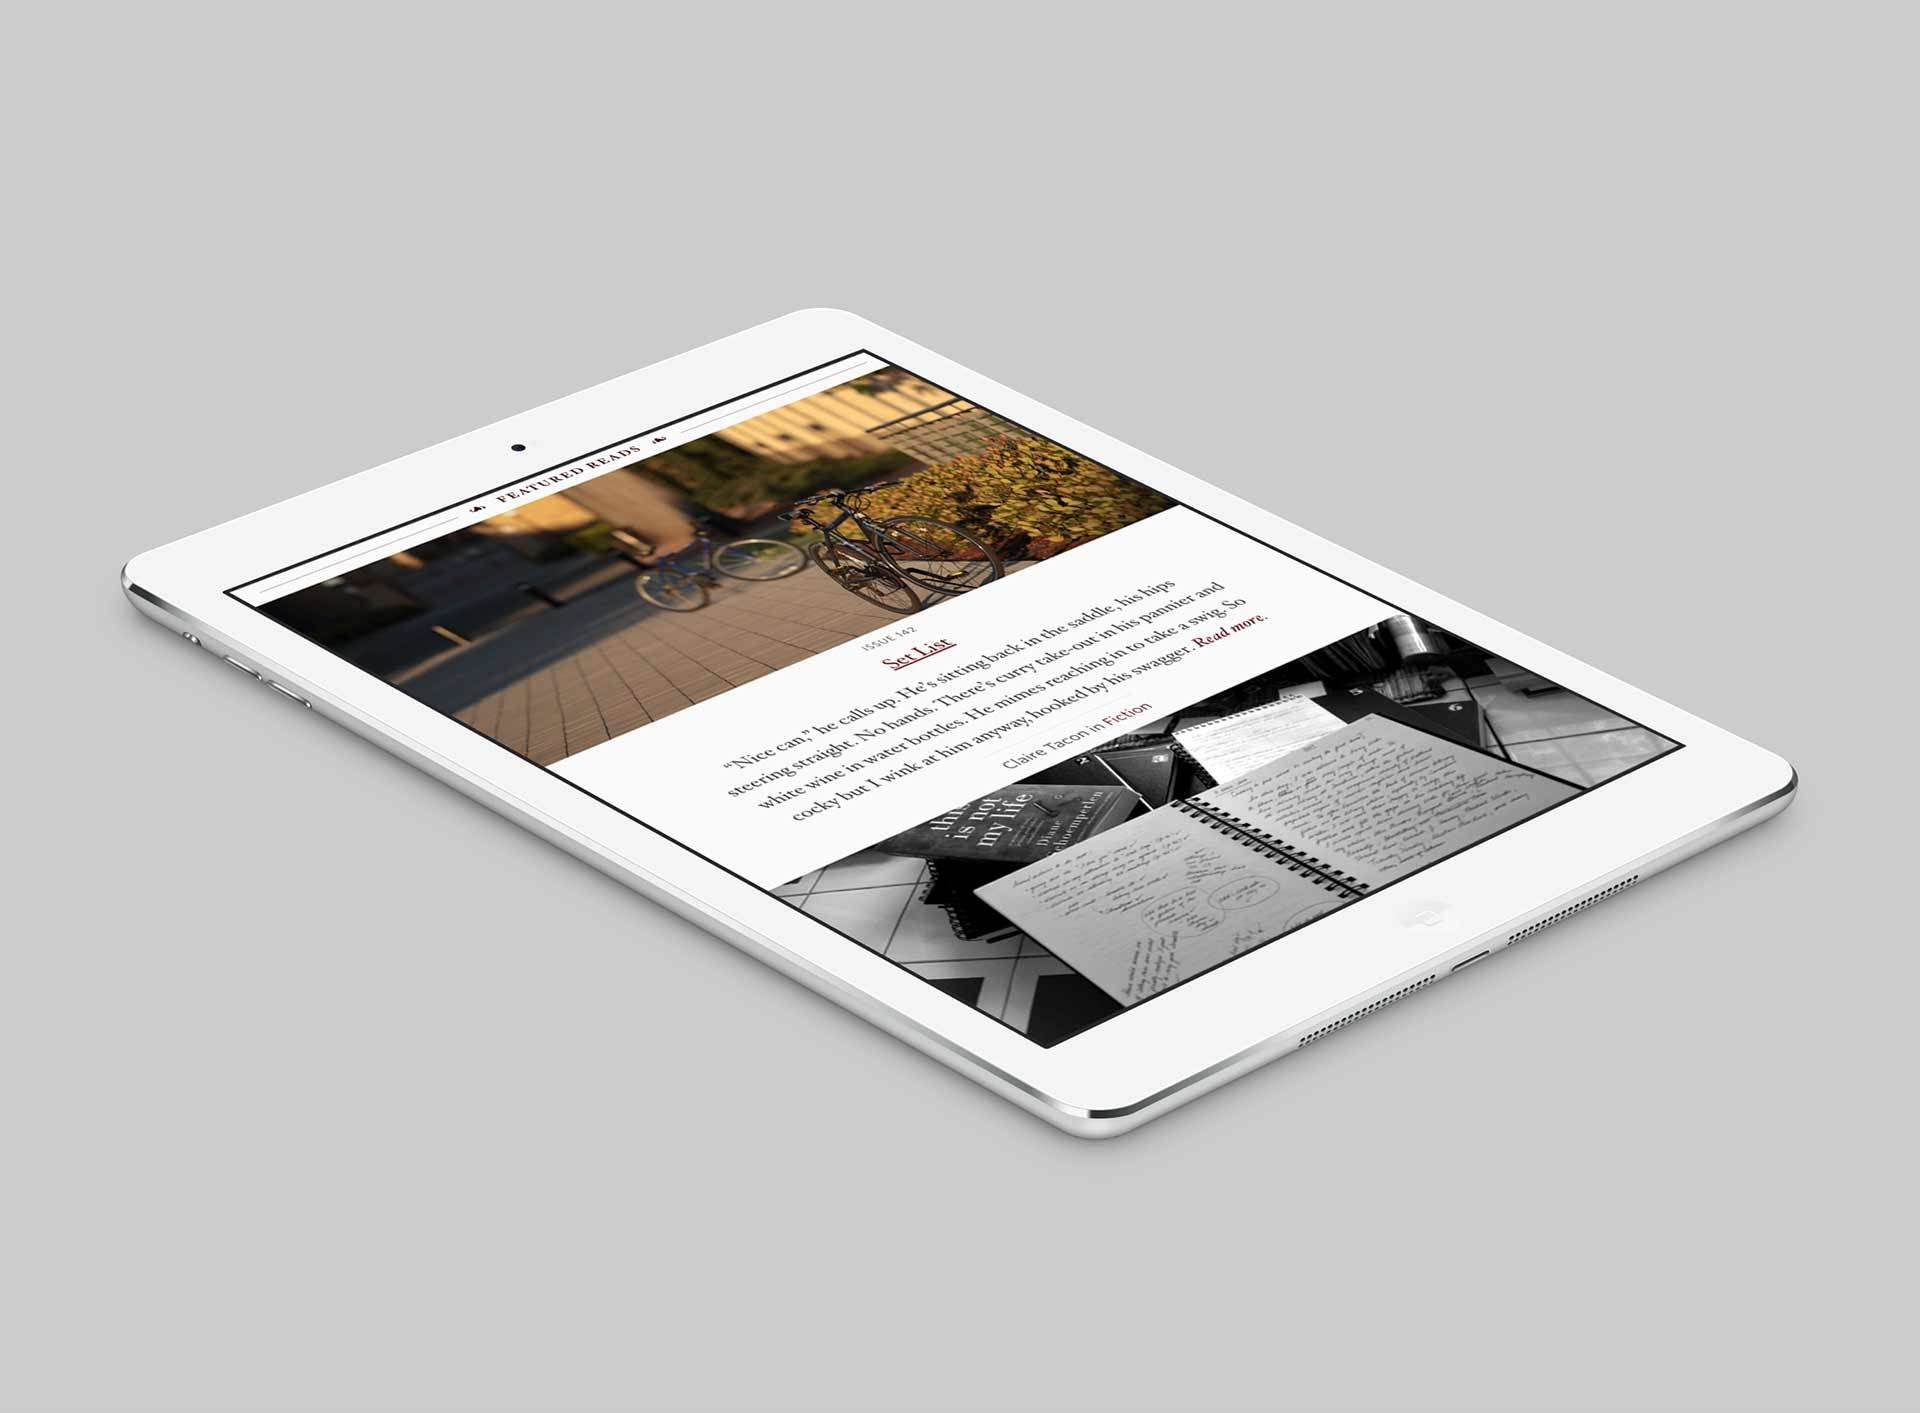 The New Quarterly on an iPad